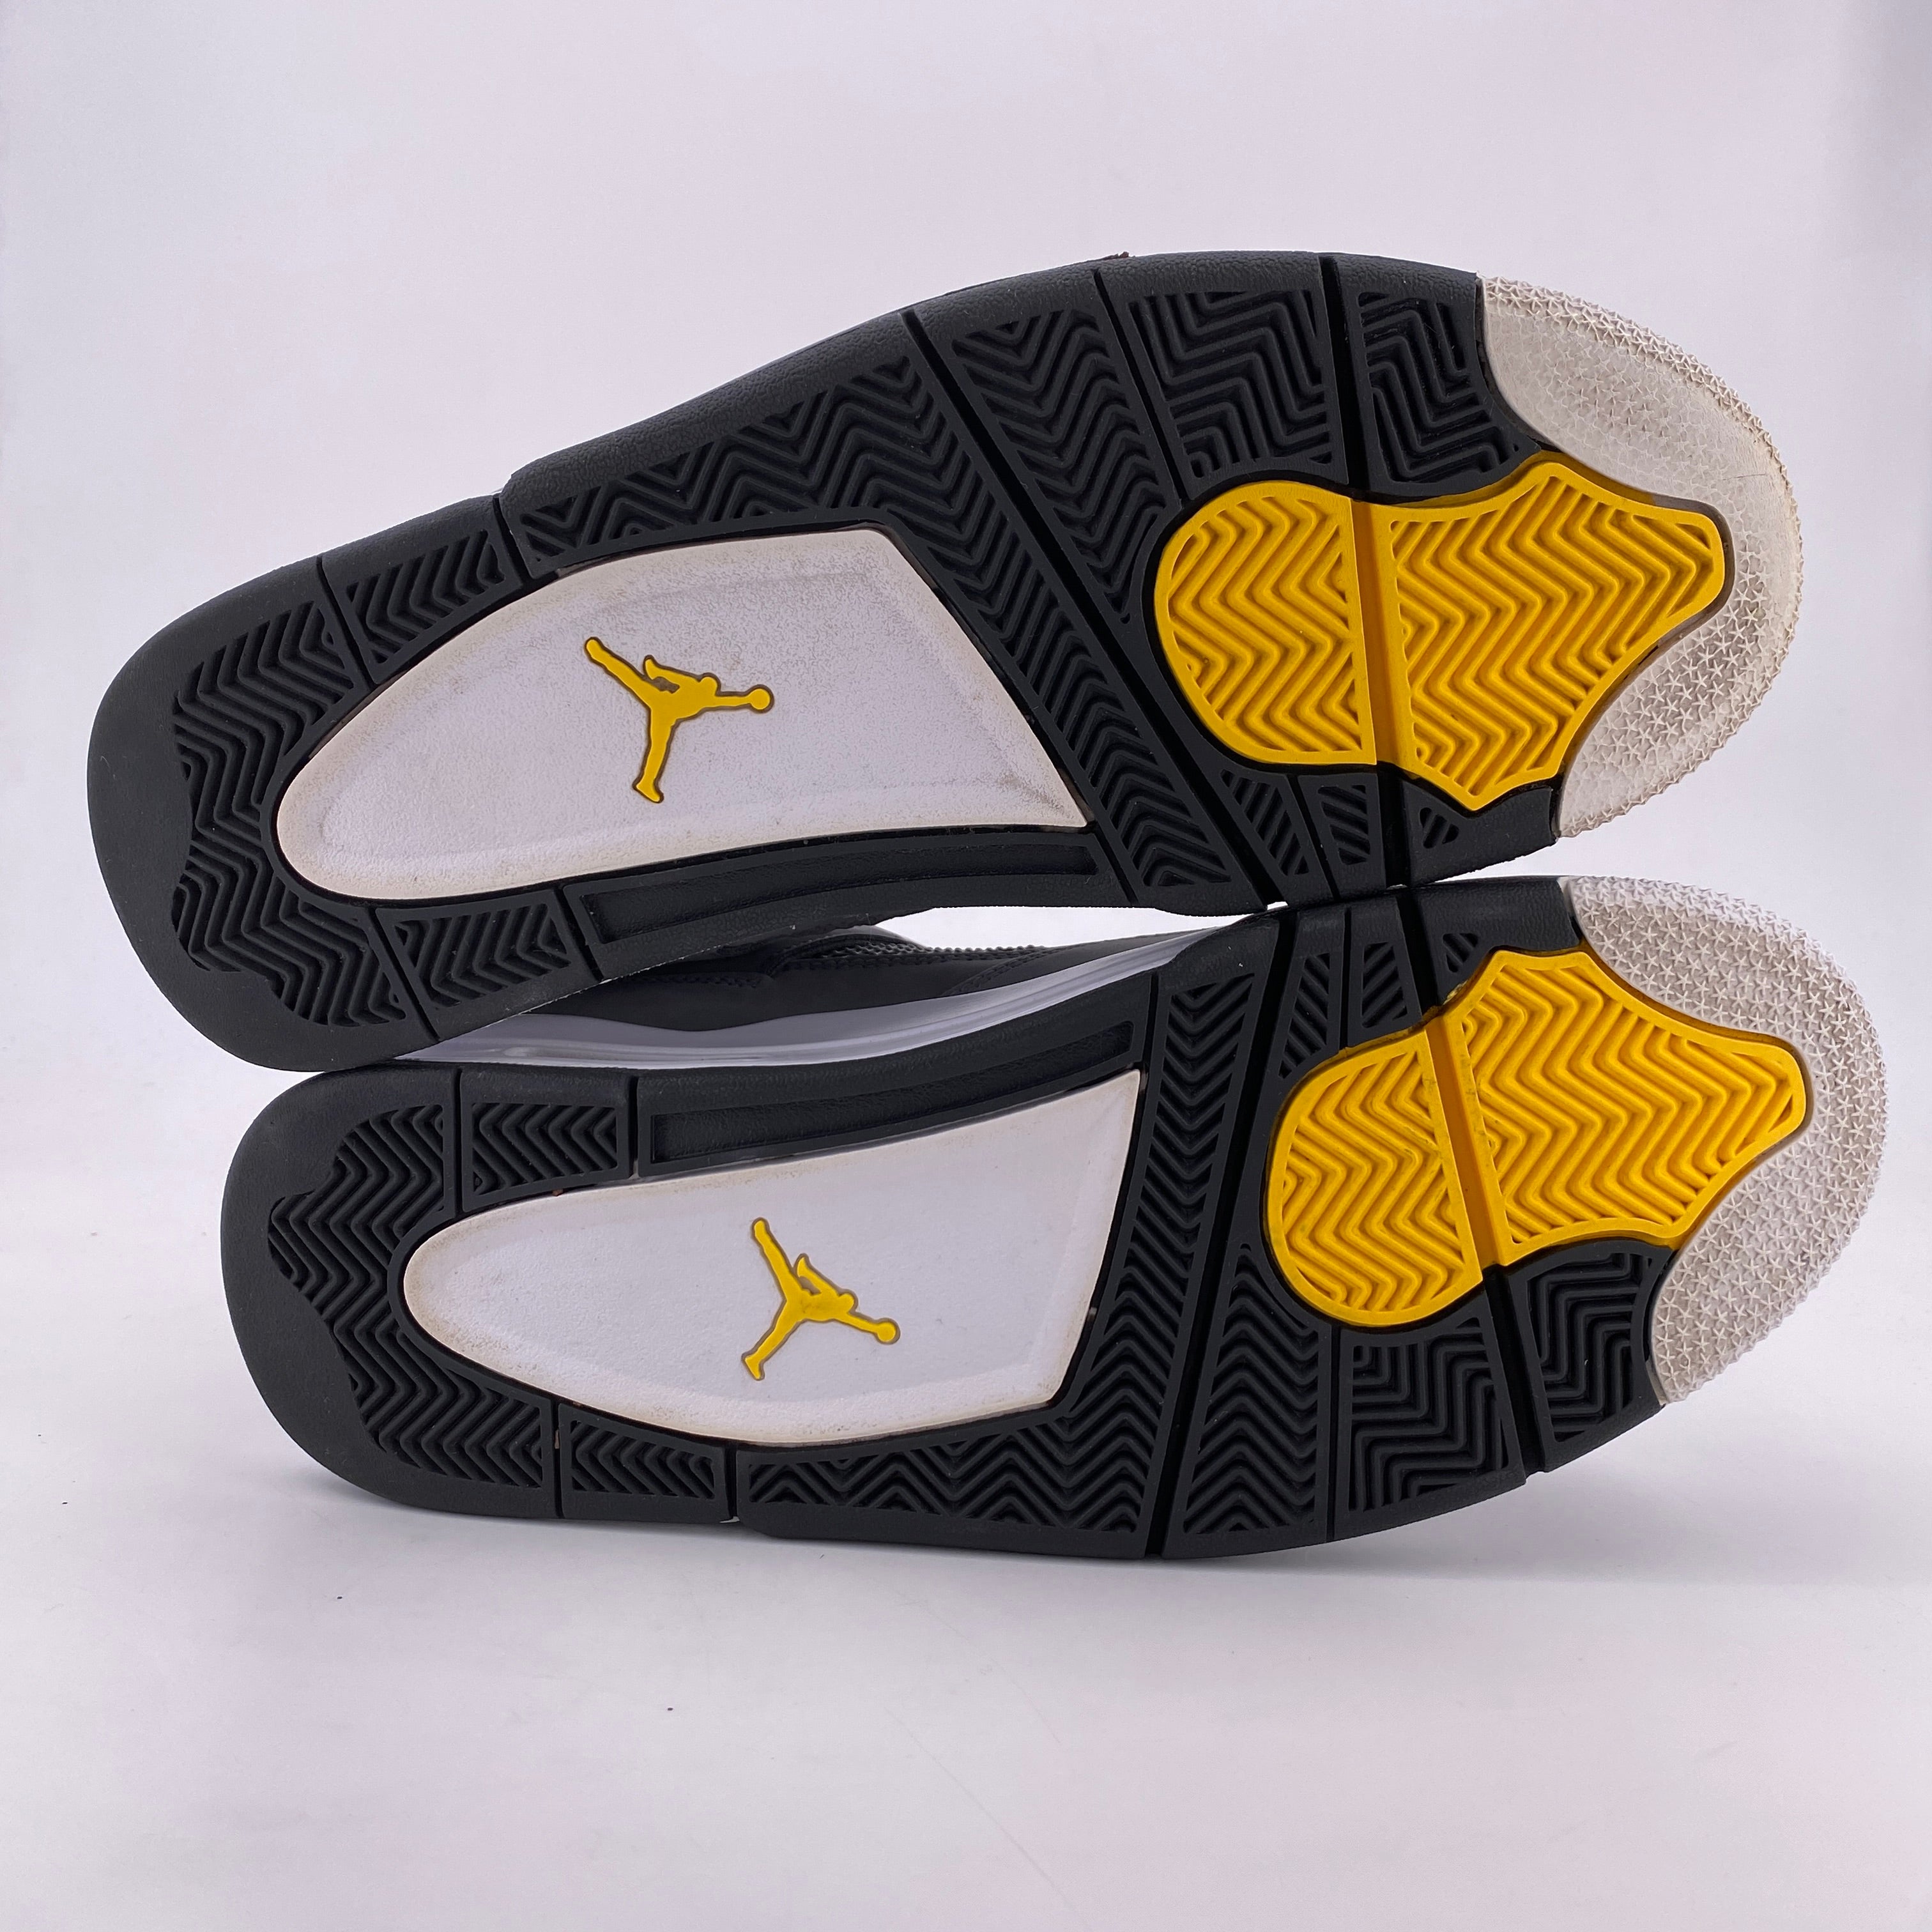 Air Jordan 4 Retro &quot;Cool Grey&quot; 2019 Used Size 10.5